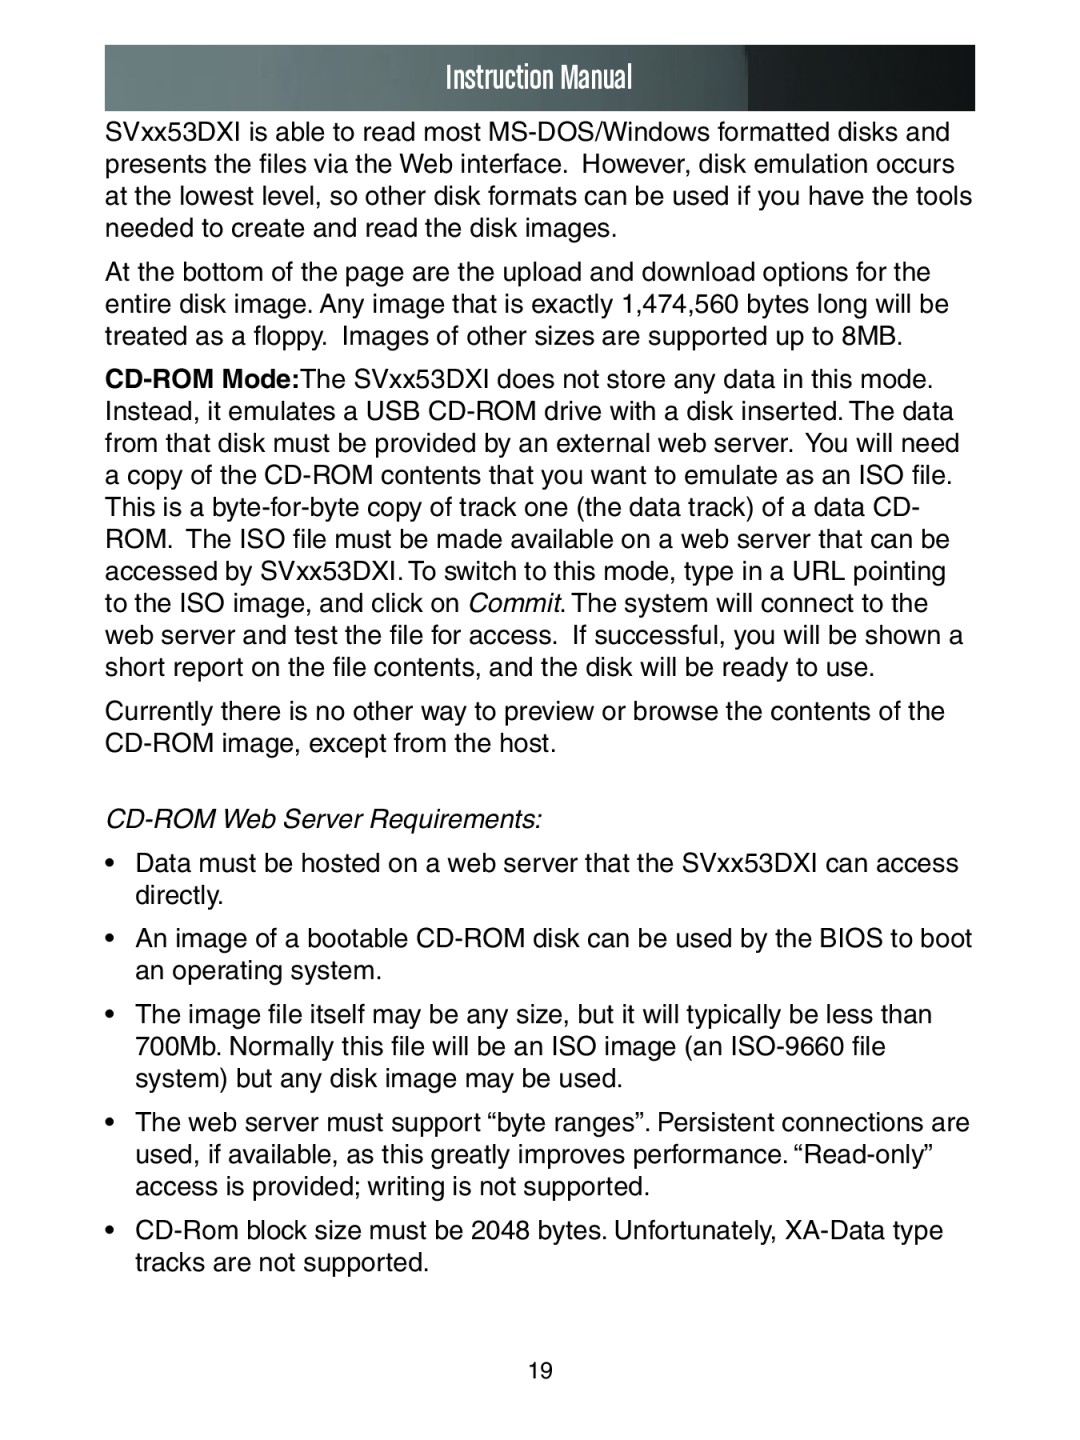 StarTech.com SV1653DXI, SV3253DXI manual CD-ROM Web Server Requirements, Instruction Manual 